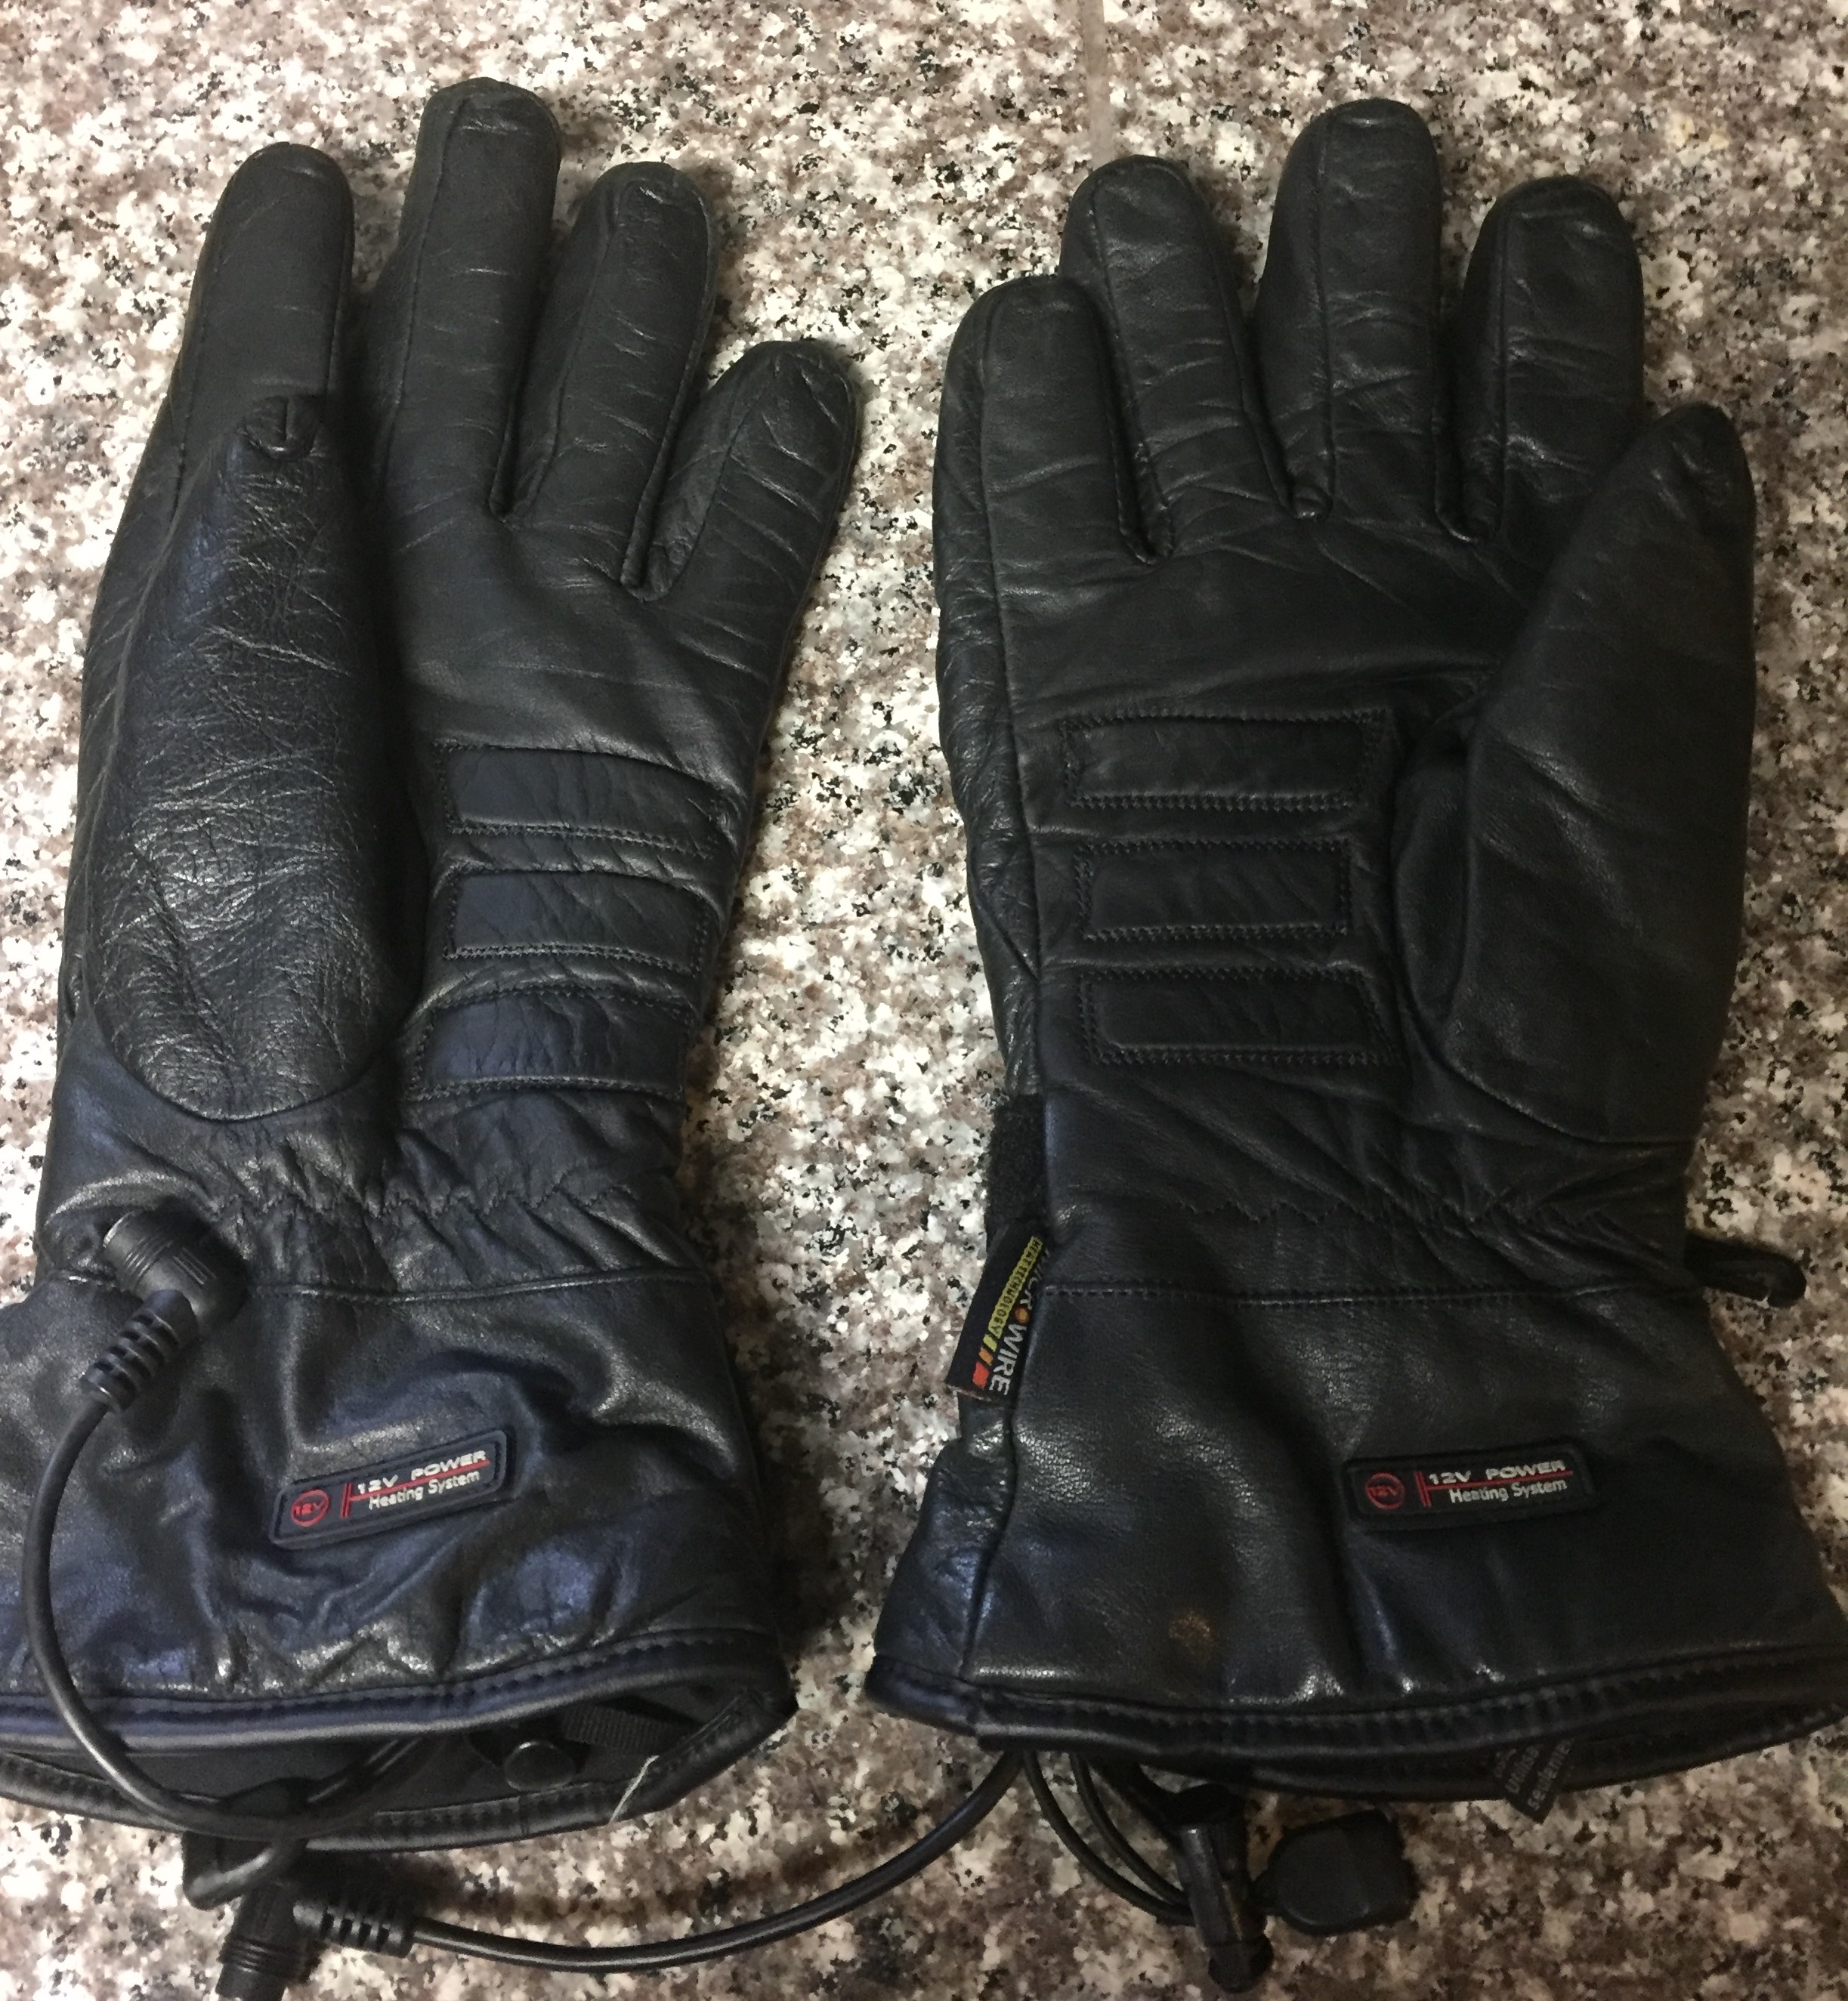 Gerbing G3 Heated Gloves-XL - Harley Davidson Forums